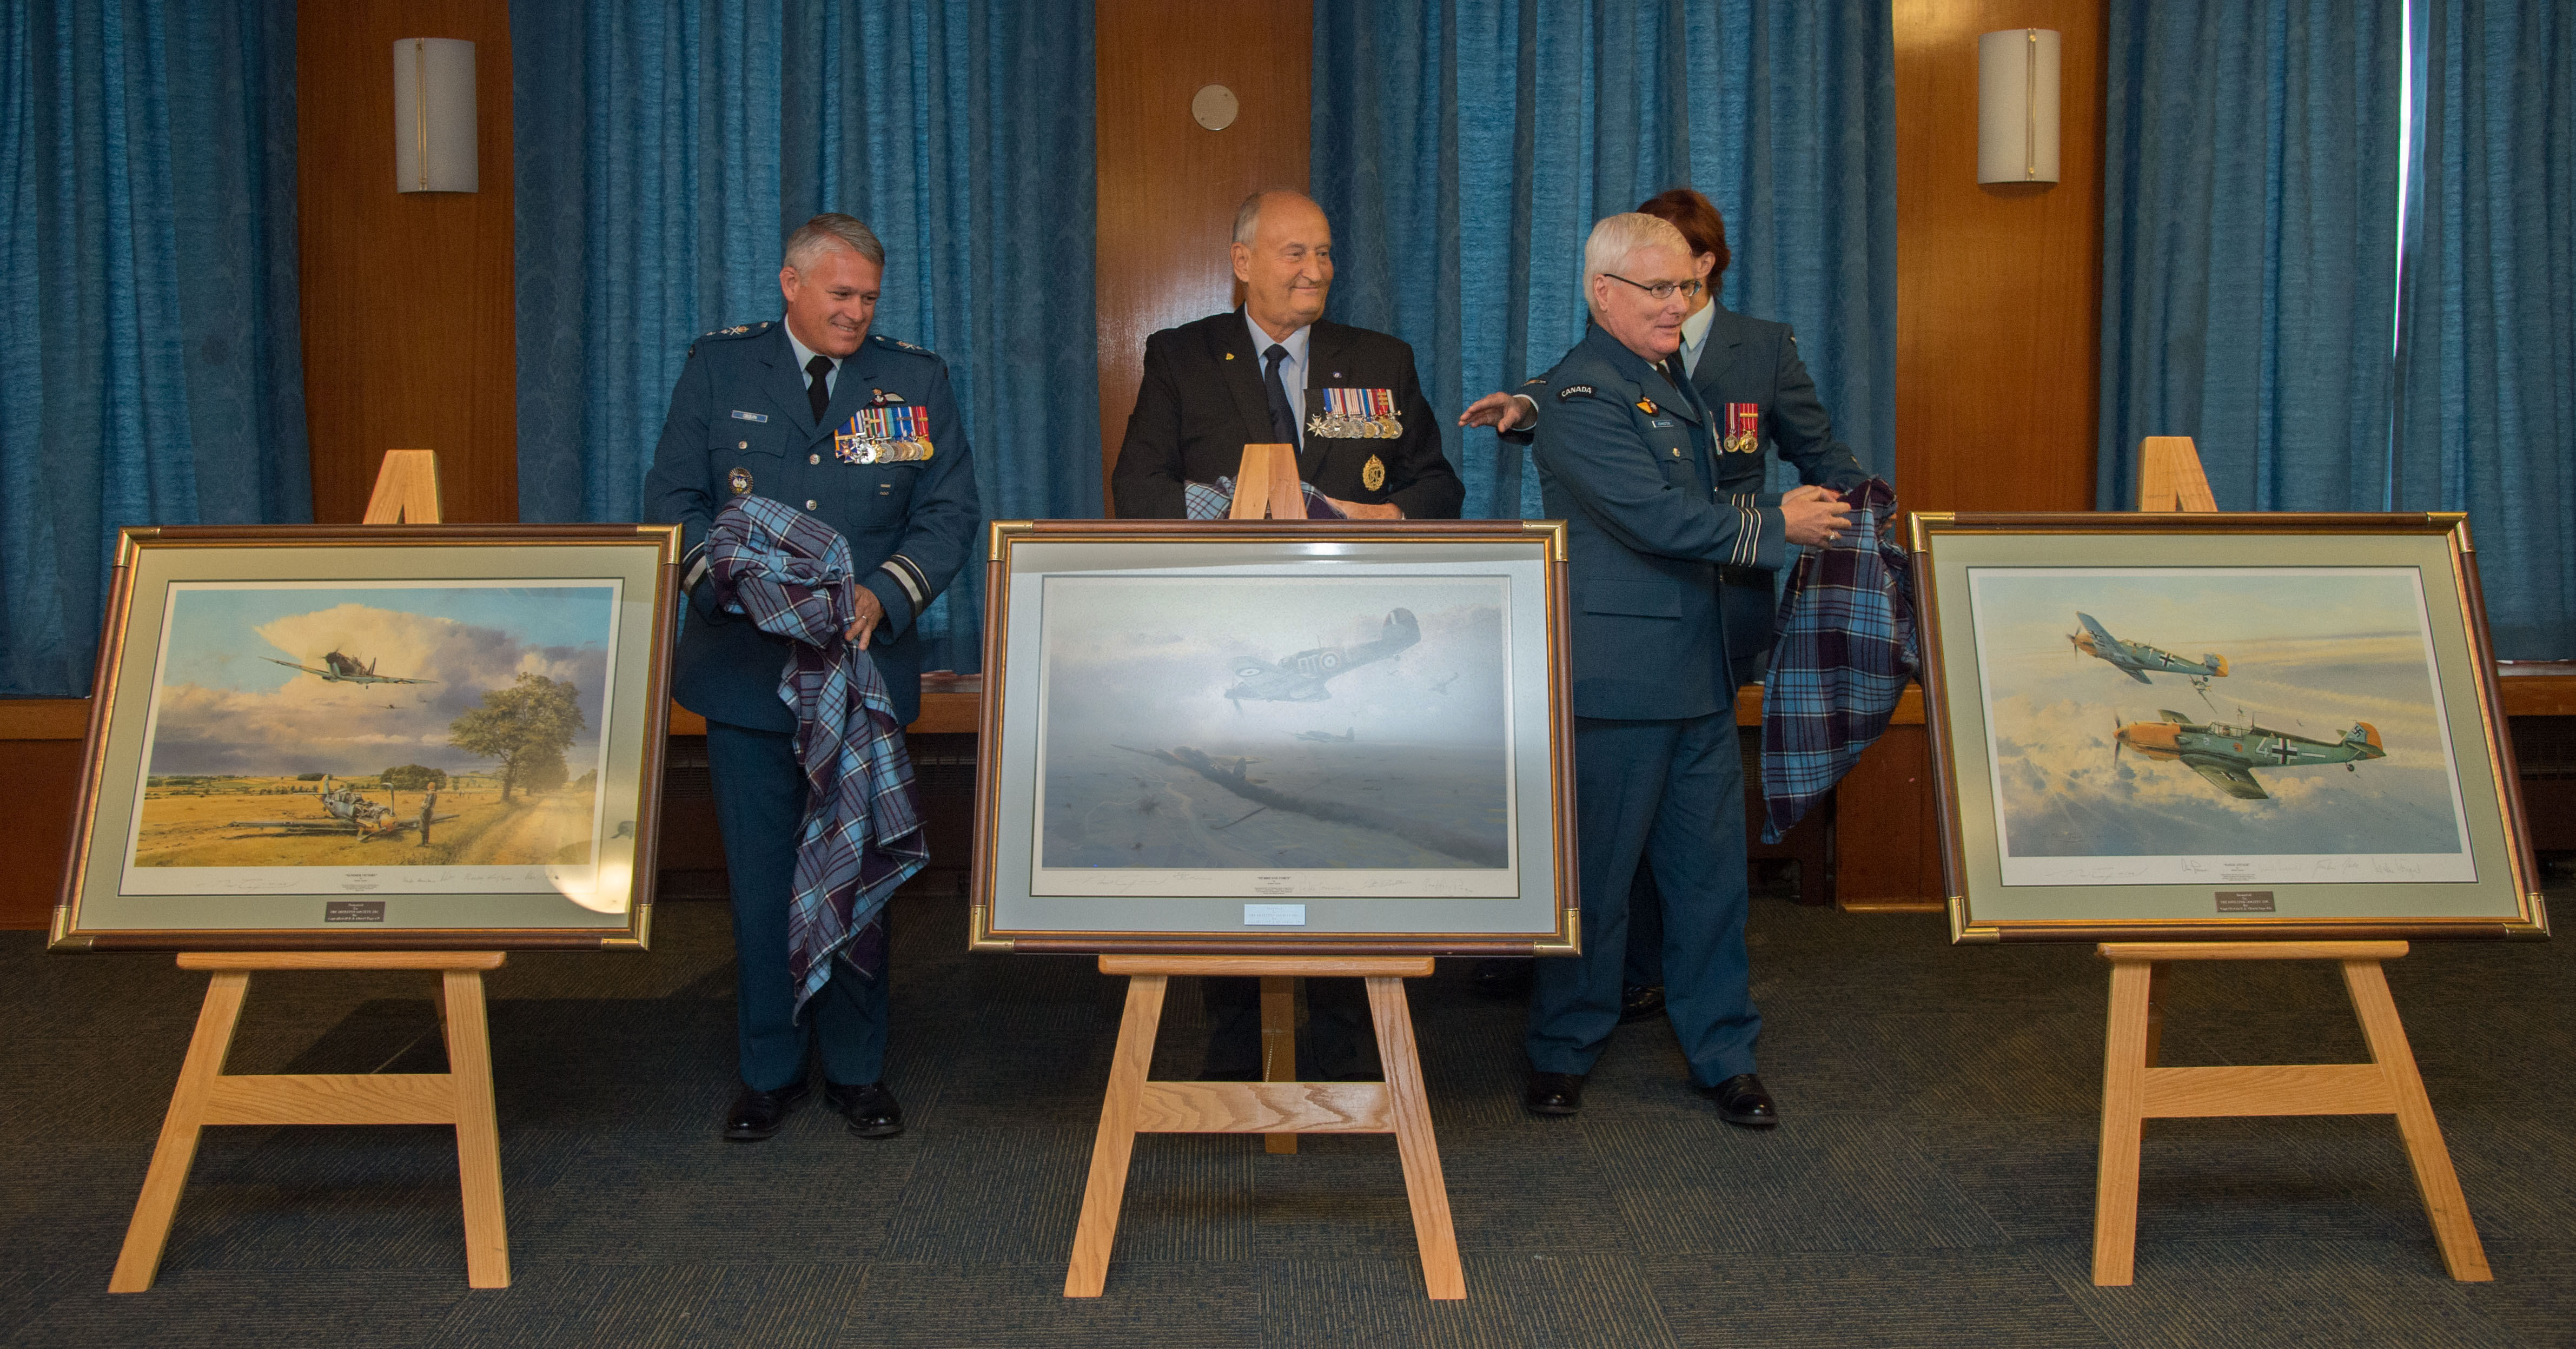 Three men reveal three paintings of aircraft.  